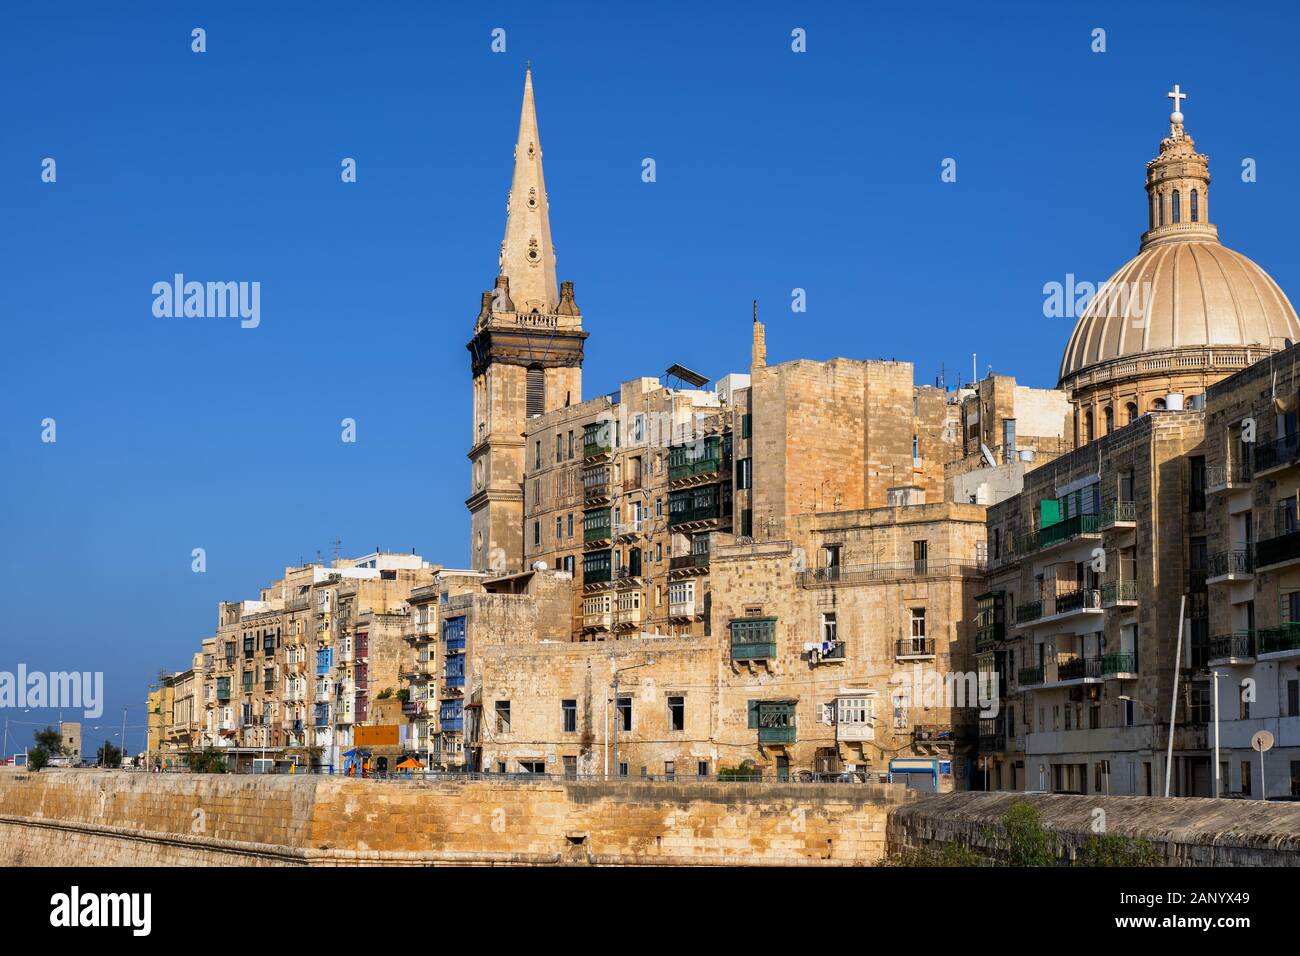 Old city of Valletta in Malta, capital of the Mediterranean island nation. Stock Photo